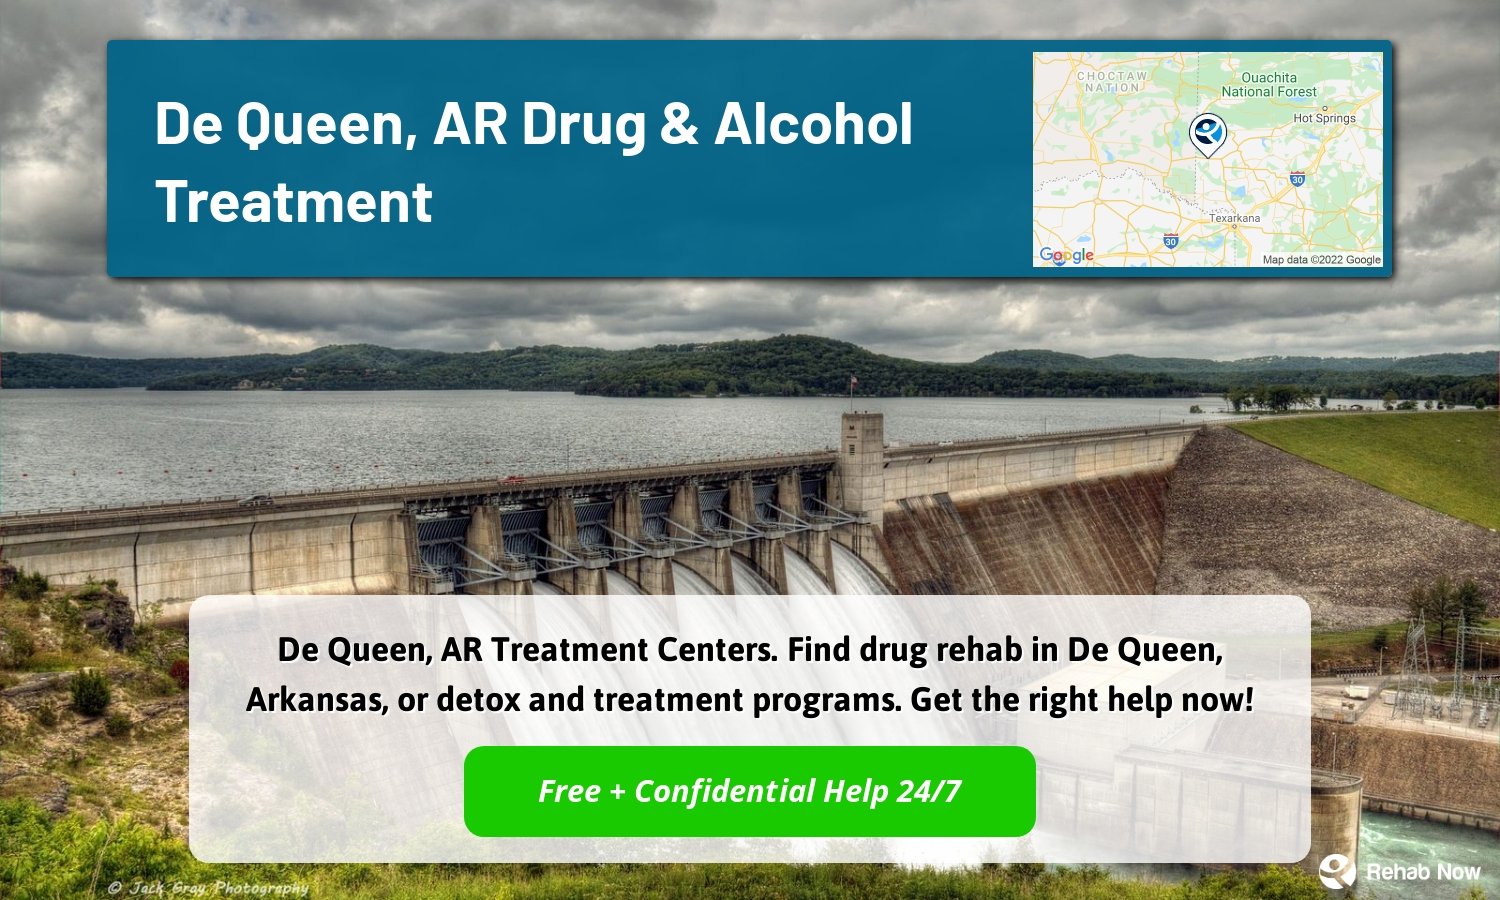 De Queen, AR Treatment Centers. Find drug rehab in De Queen, Arkansas, or detox and treatment programs. Get the right help now!